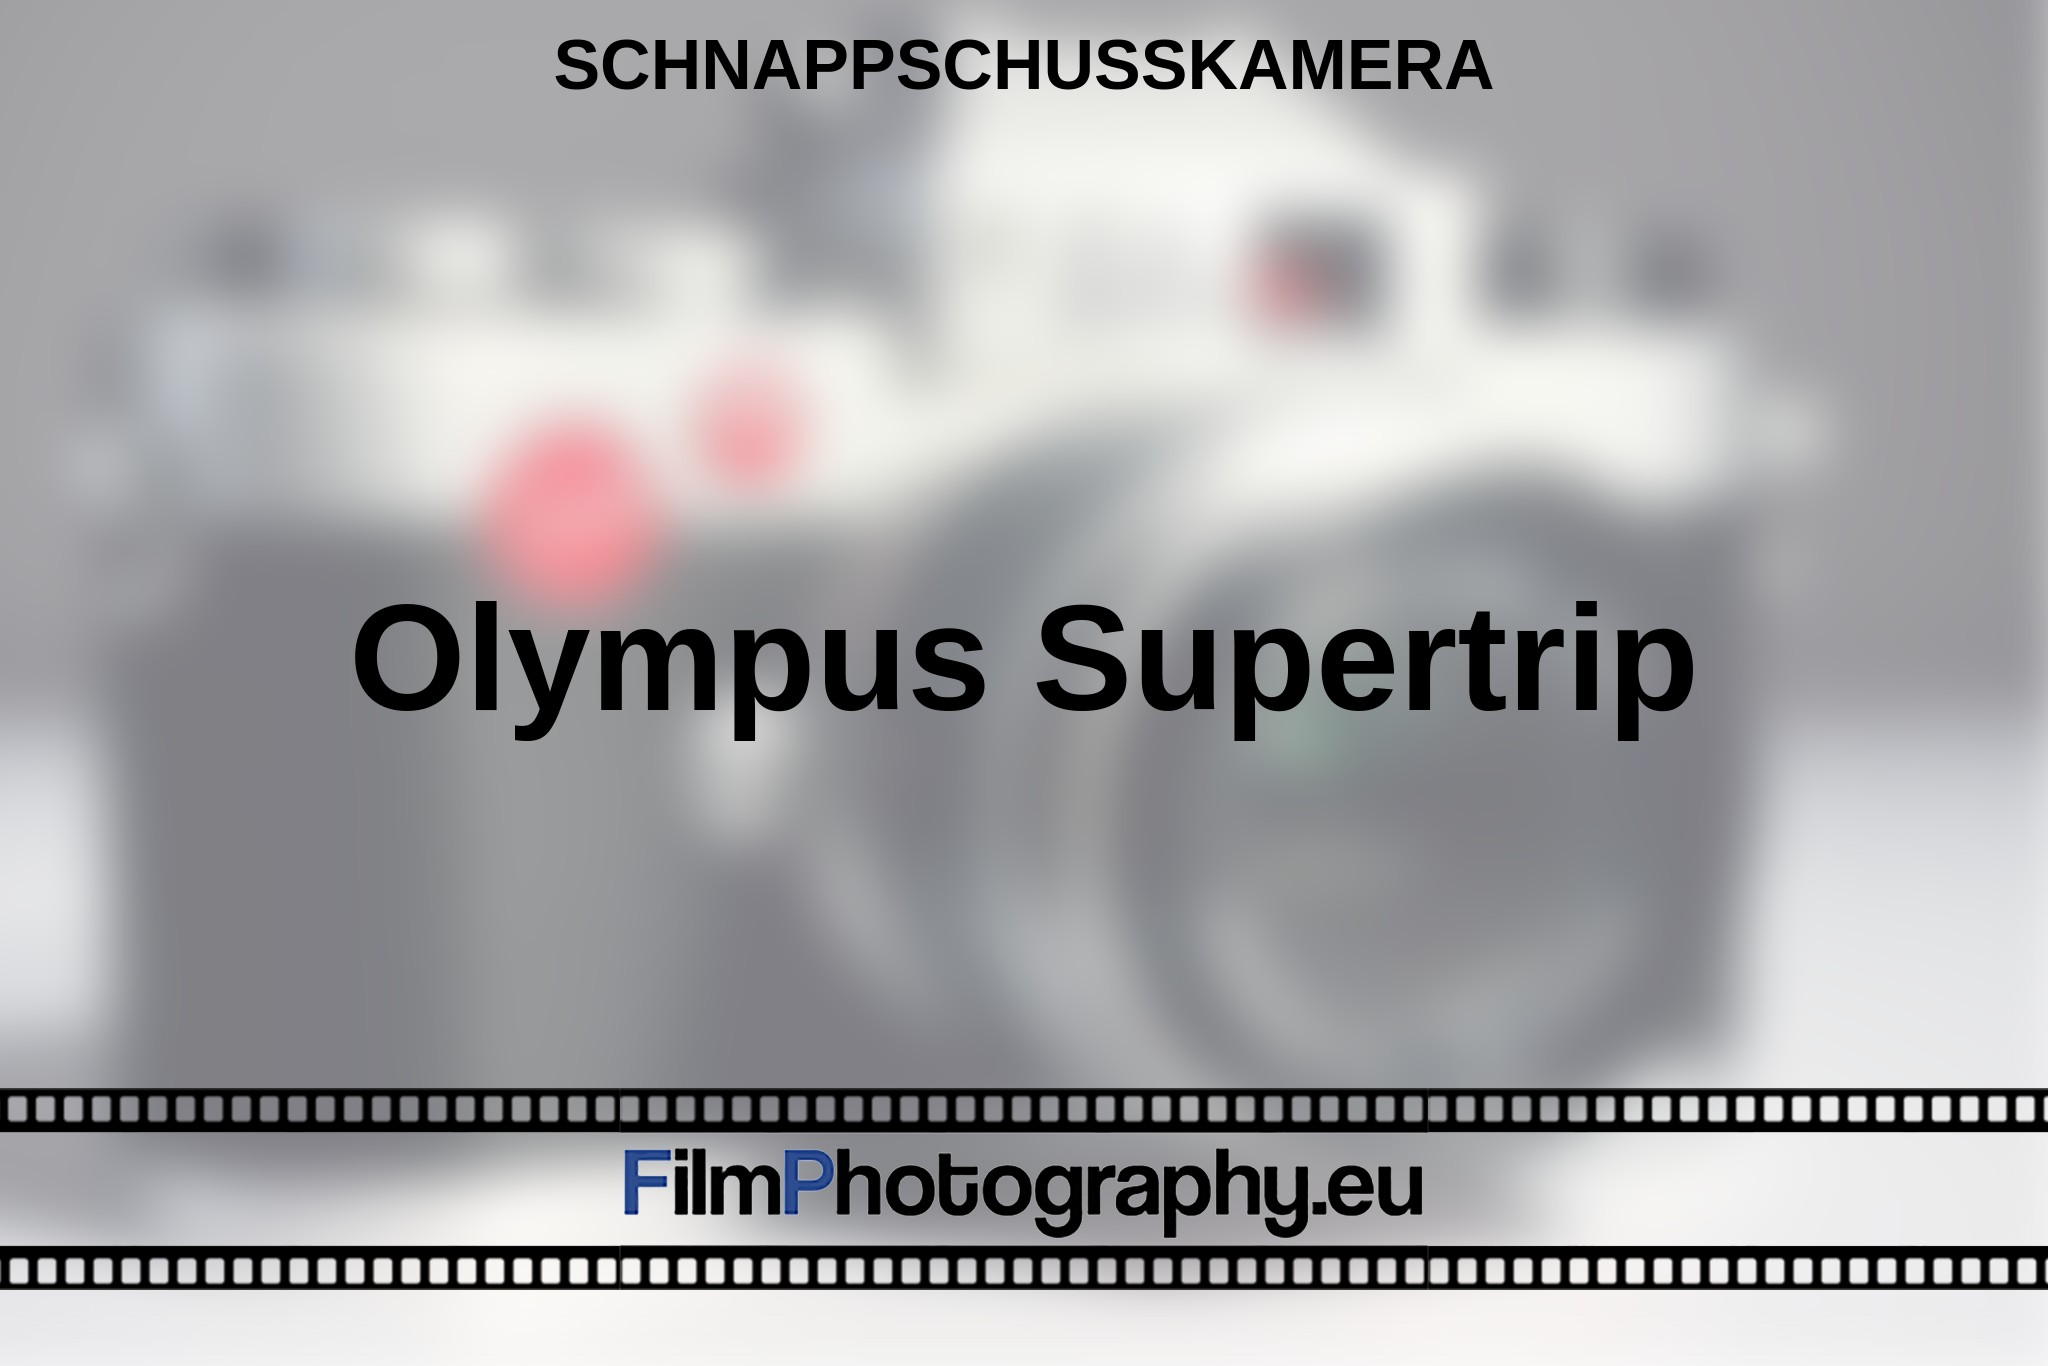 olympus-supertrip-schnappschusskamera-bnv.jpg